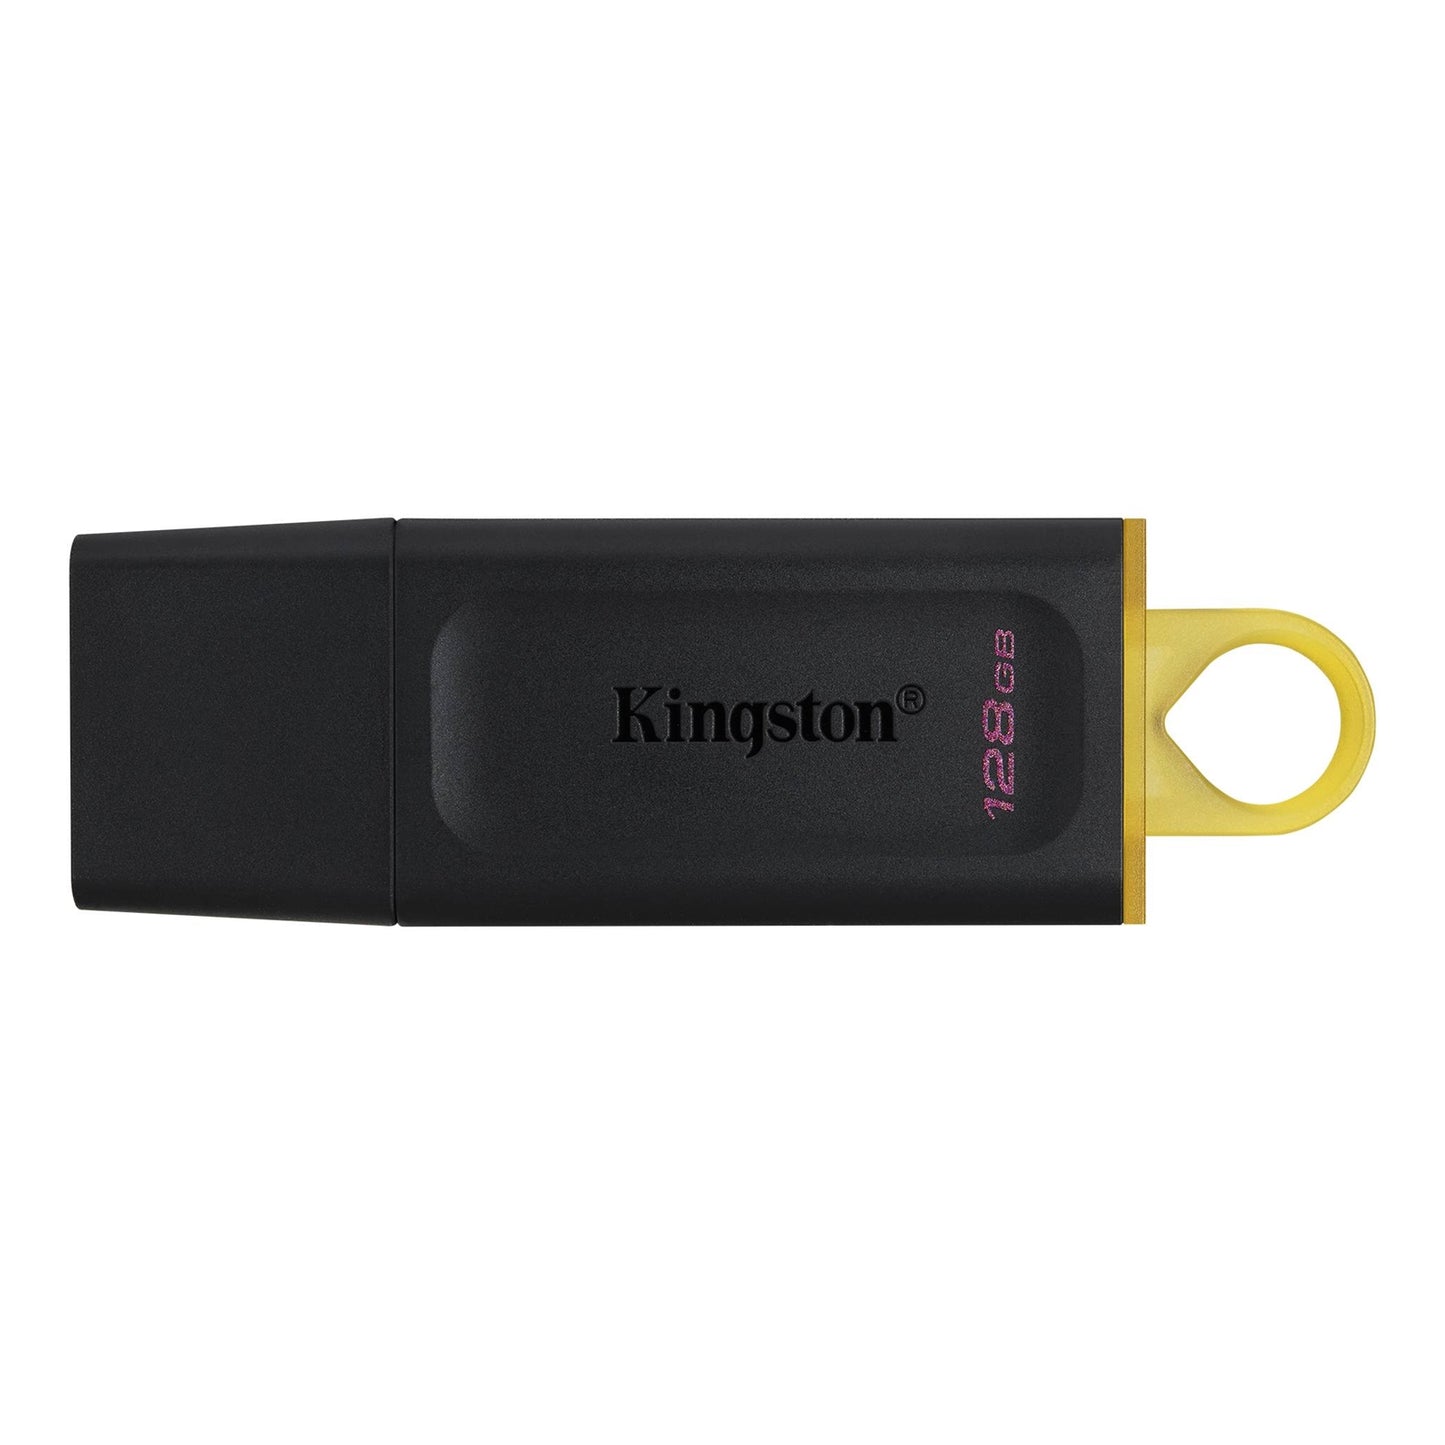 Kingston DataTraveler Exodia 128GB USB 3.2 Memory Stick Black/Yellow Flash Drive